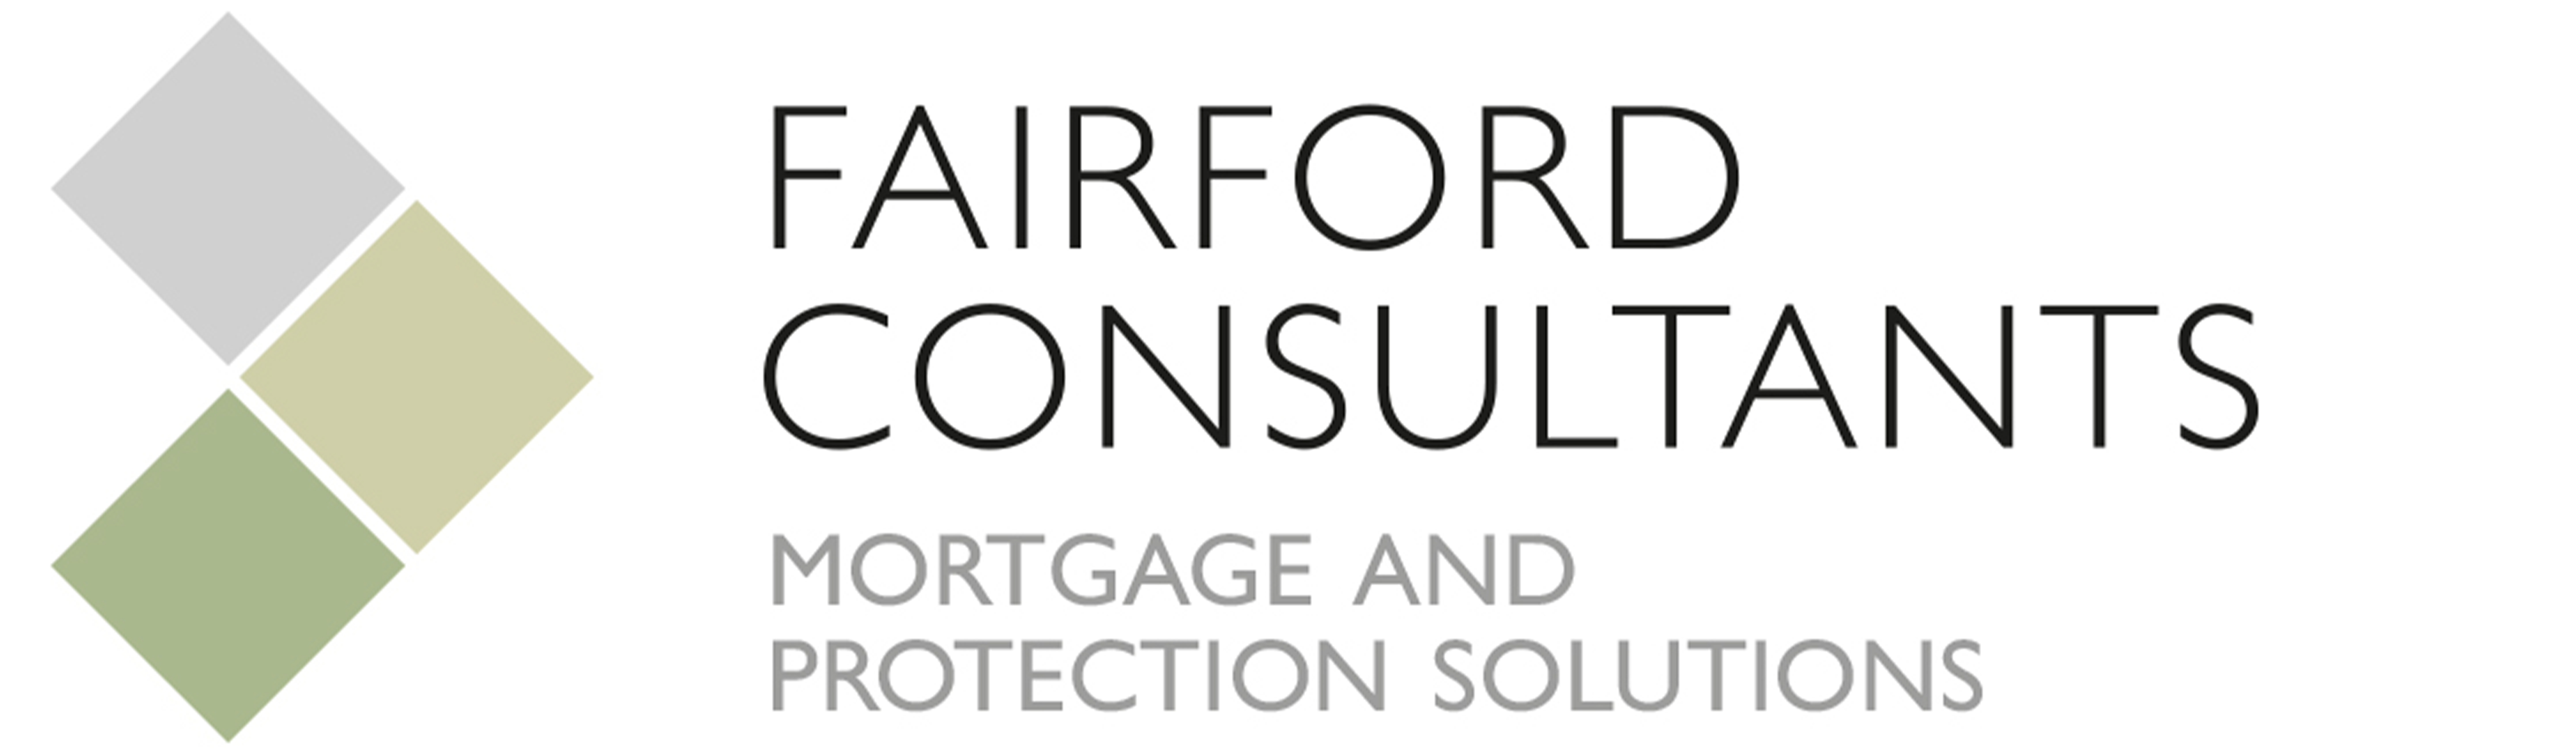 Fairford Consultants